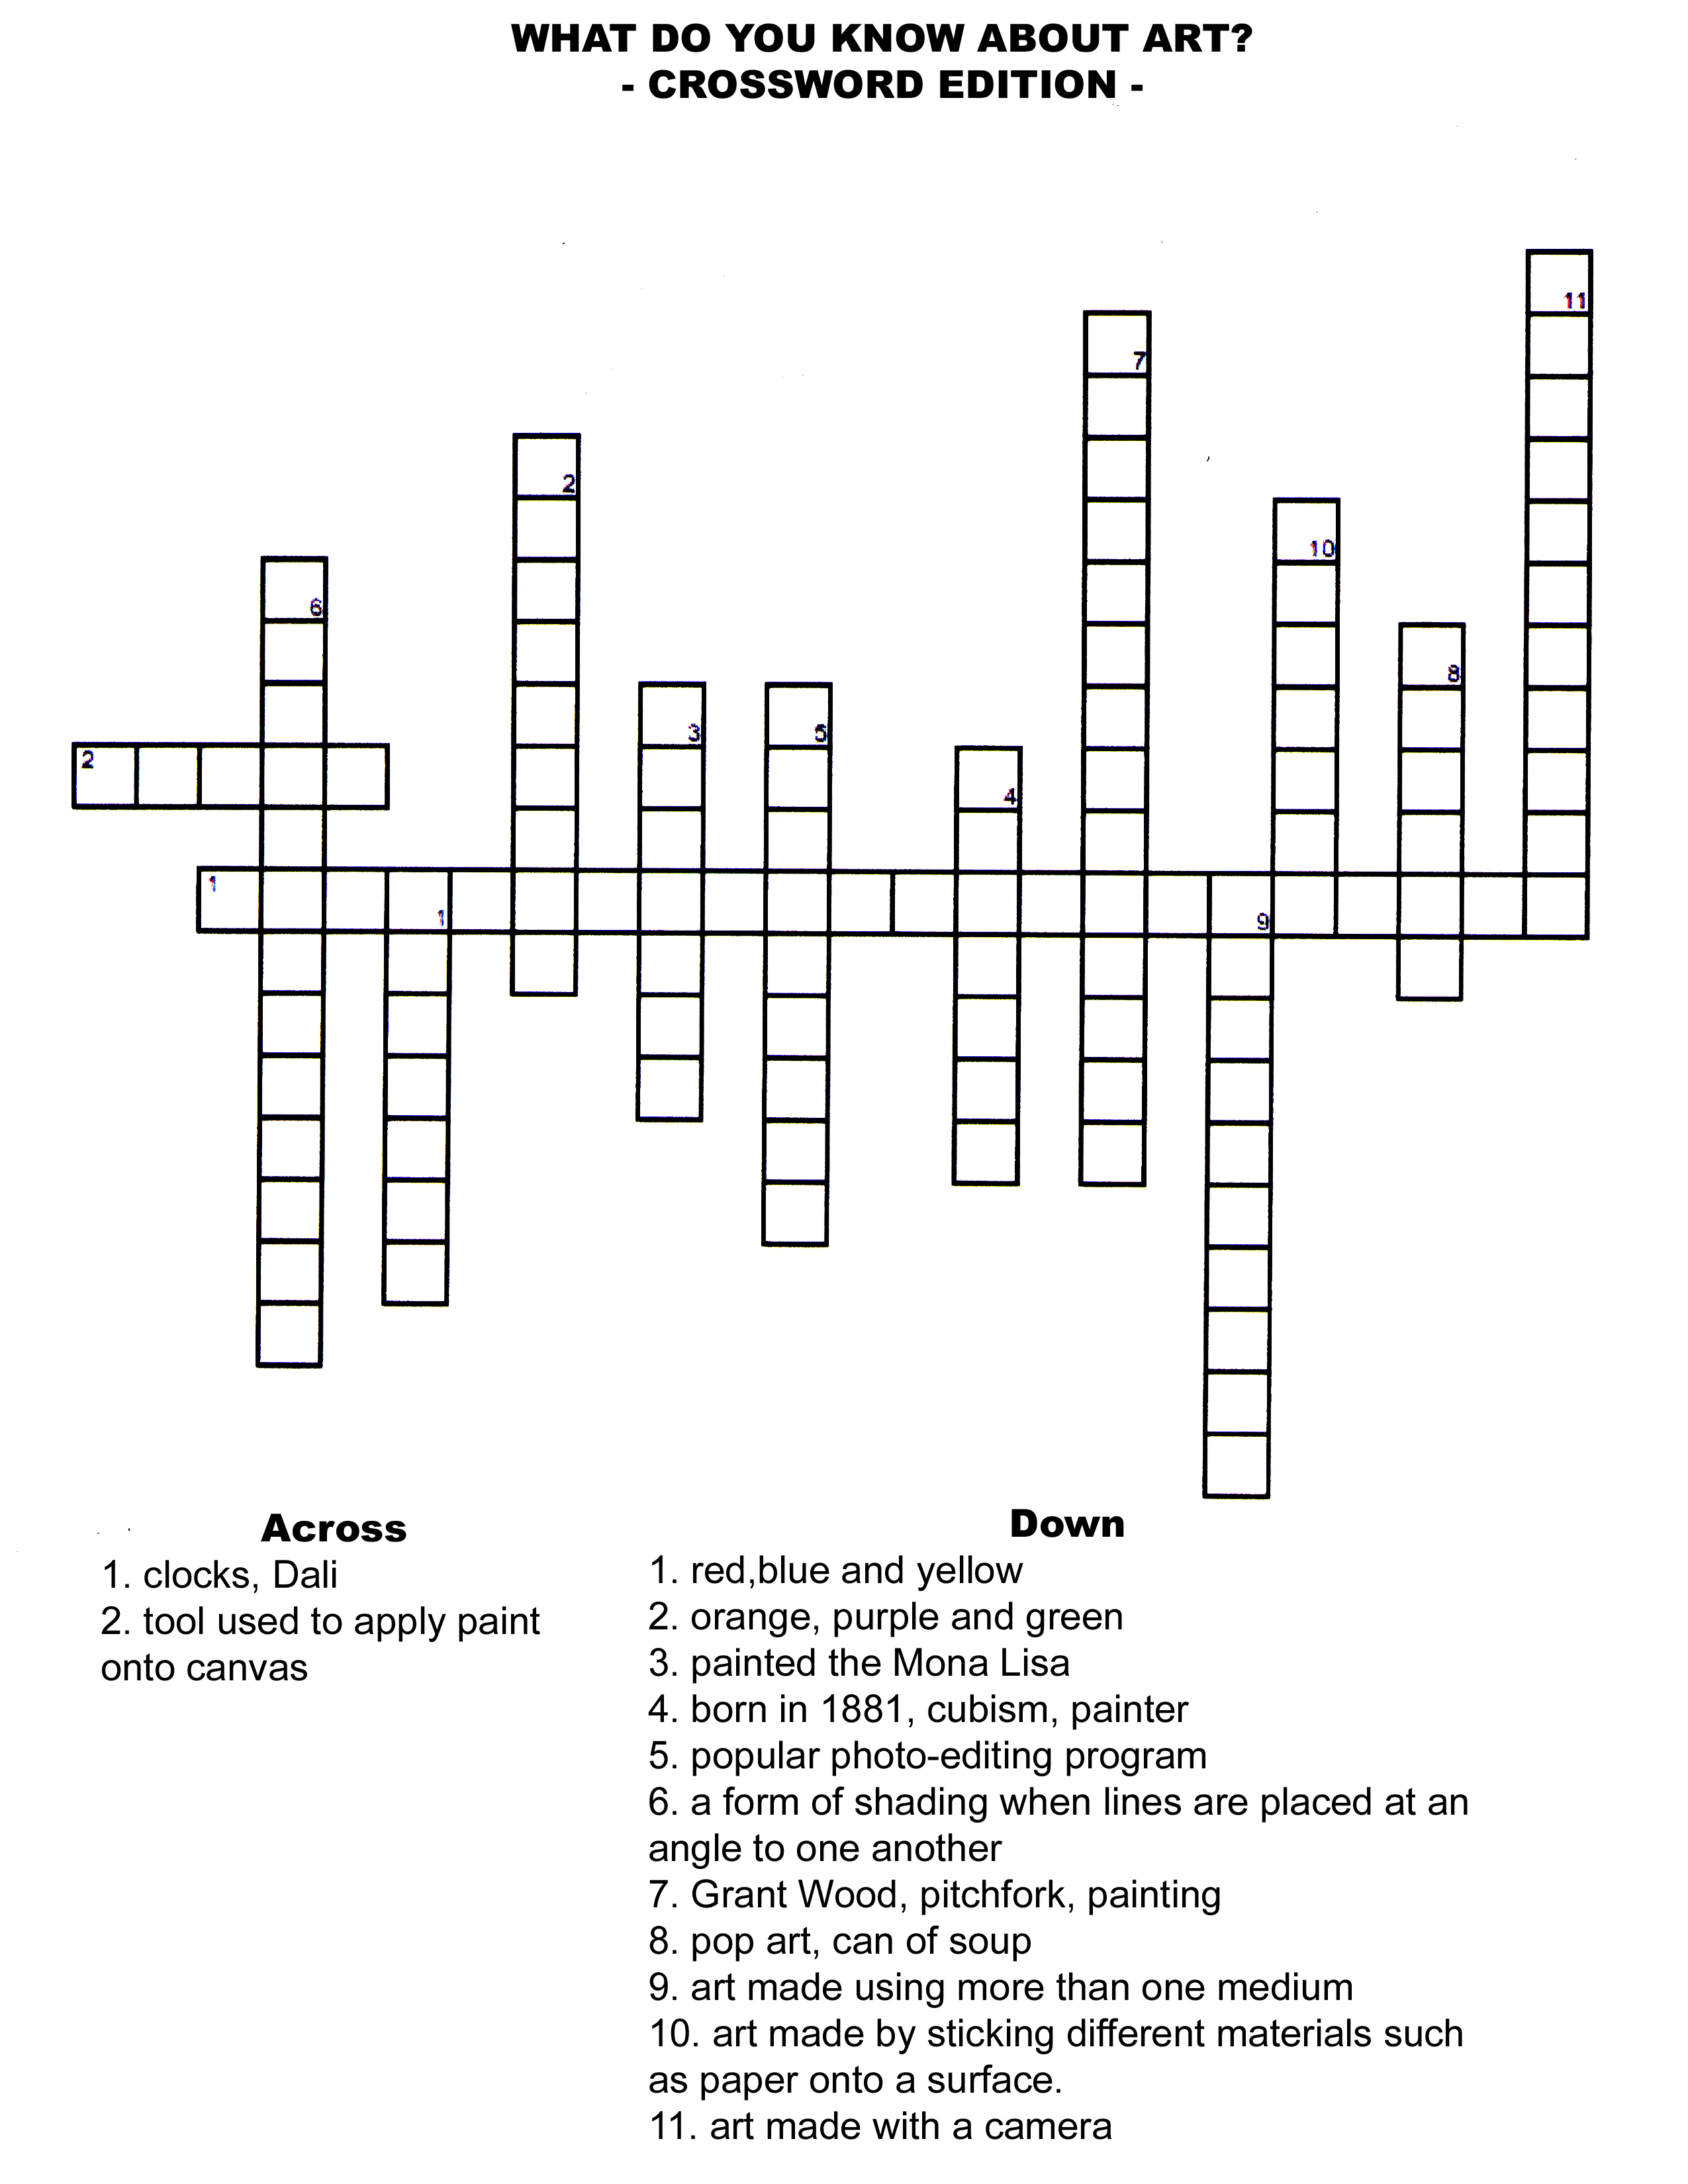 finicky 9lives spokescat crossword clue